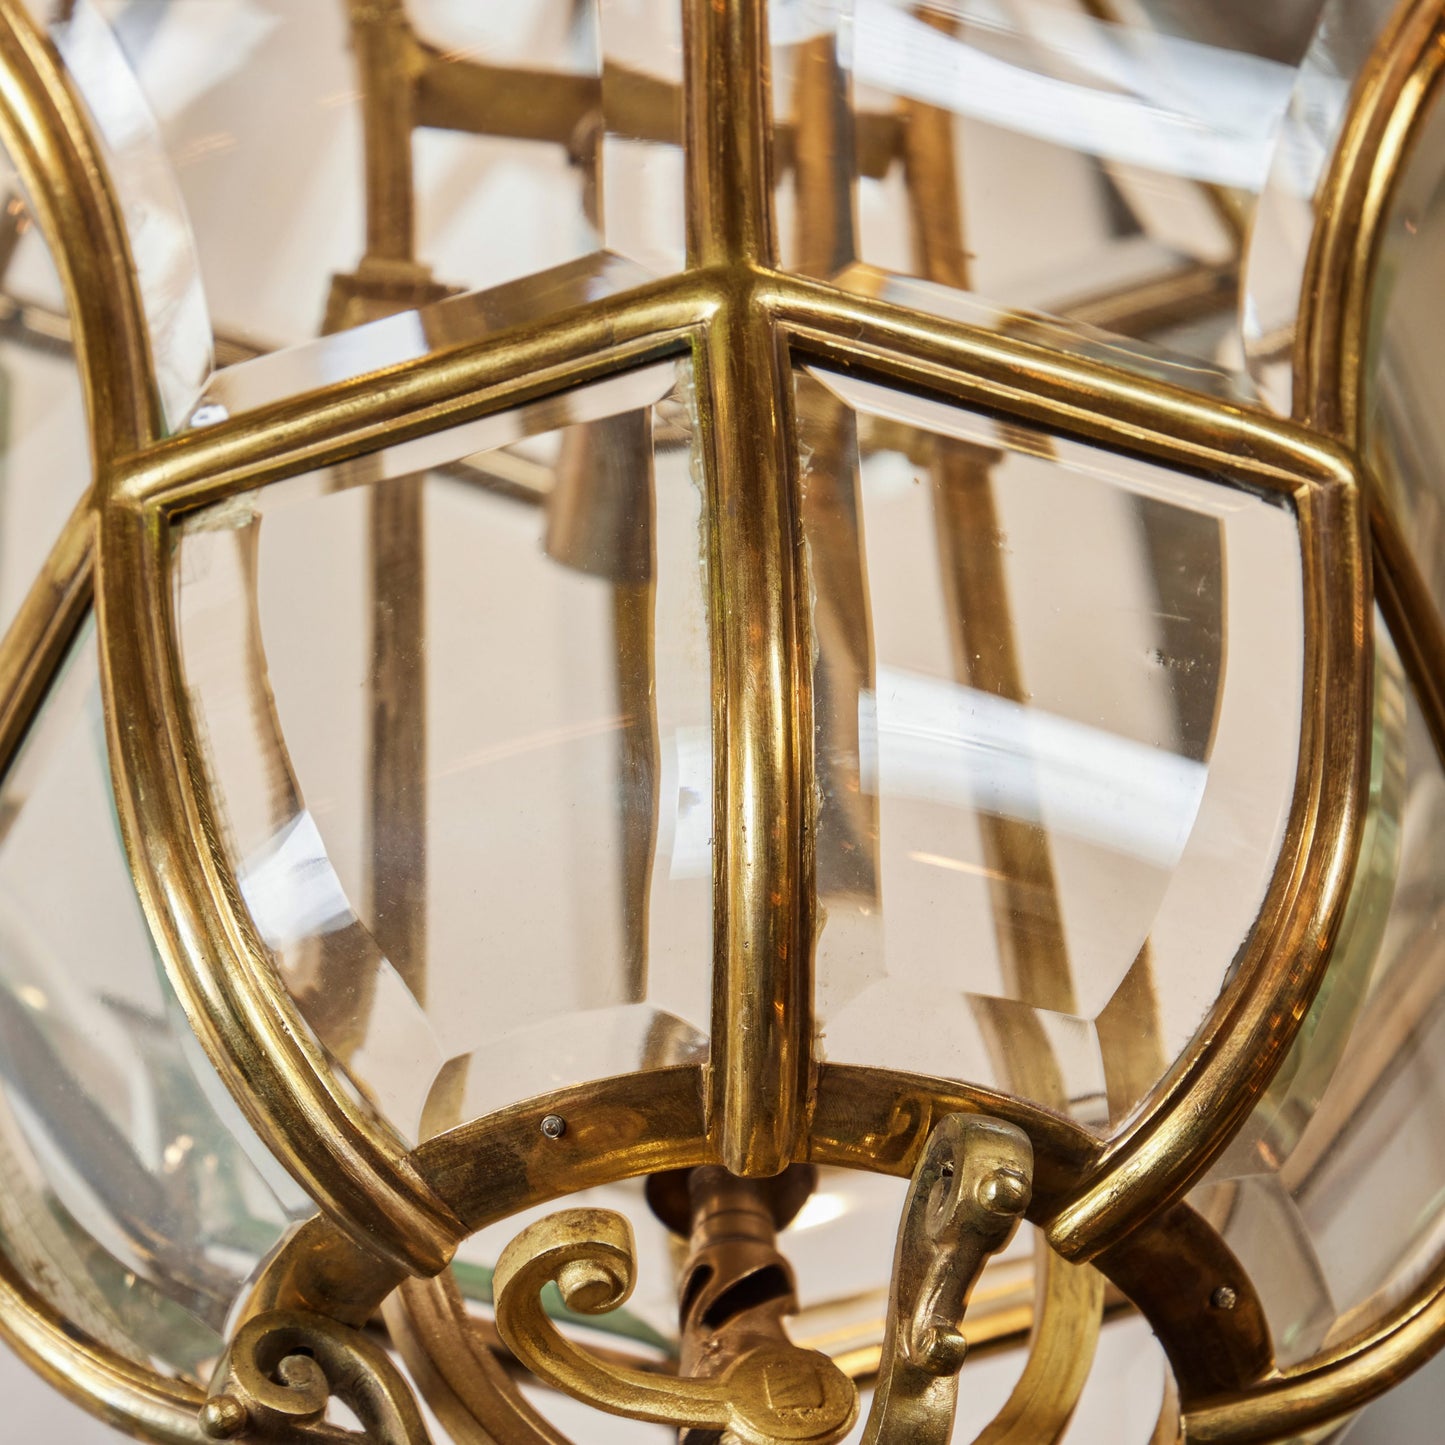 Gold Bronze Octagon Shaped Lantern